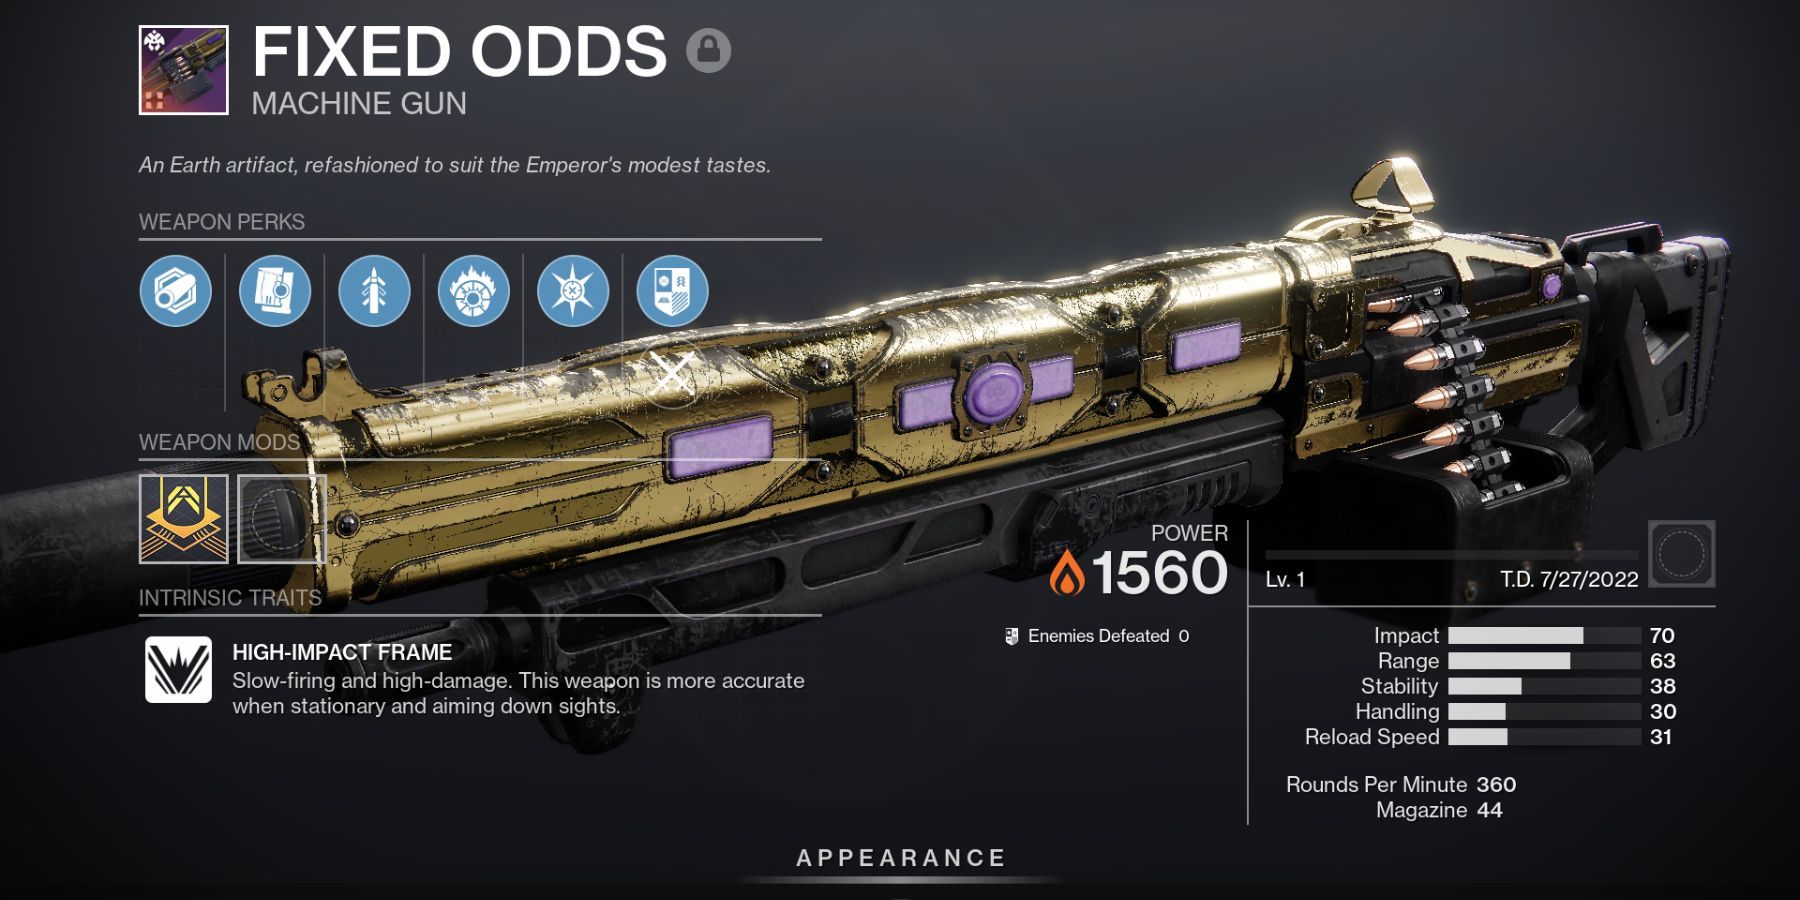 Destiny 2 Fixed Odds Machine Gun